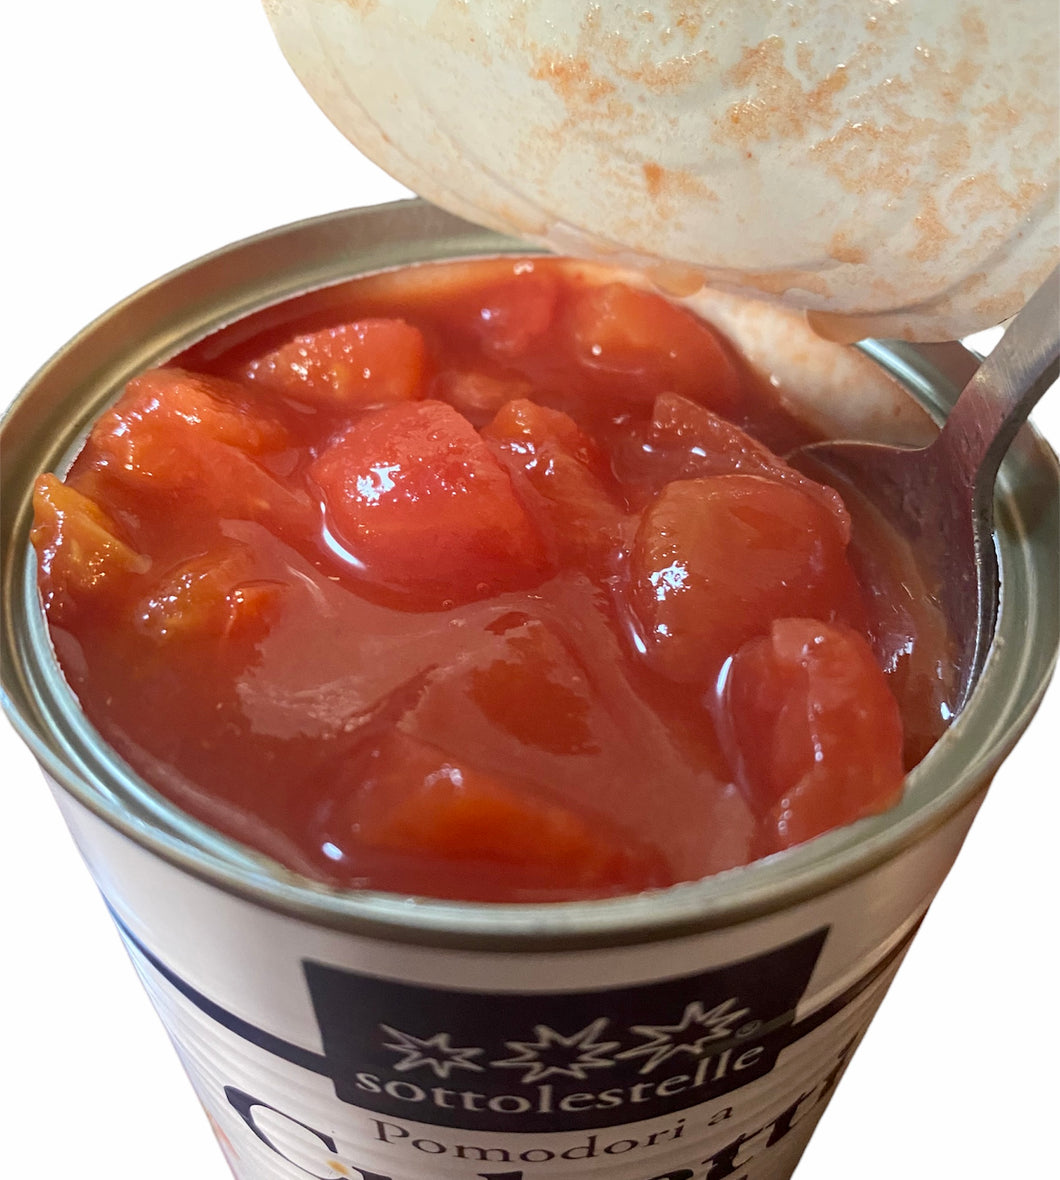 Tomato cubes 🍅 切粒家鄉蕃茄 · 粒粒厚肉 - 400g 【有機】